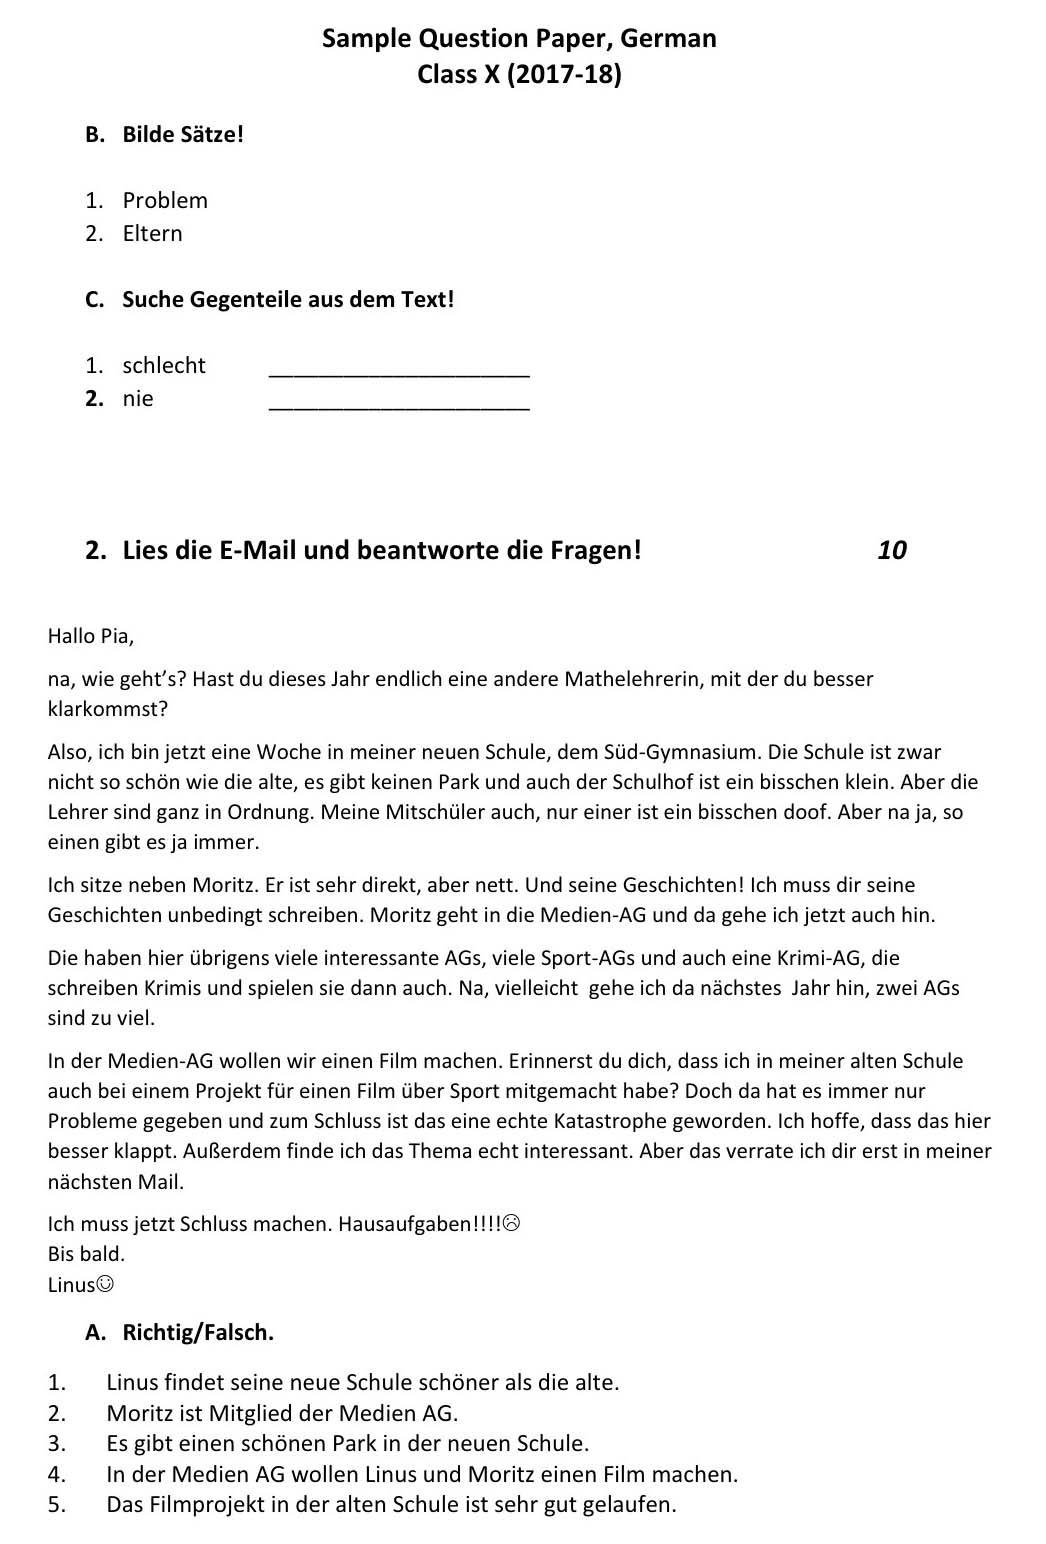 German CBSE Class X Sample Question Paper 2017 18 - Image 2